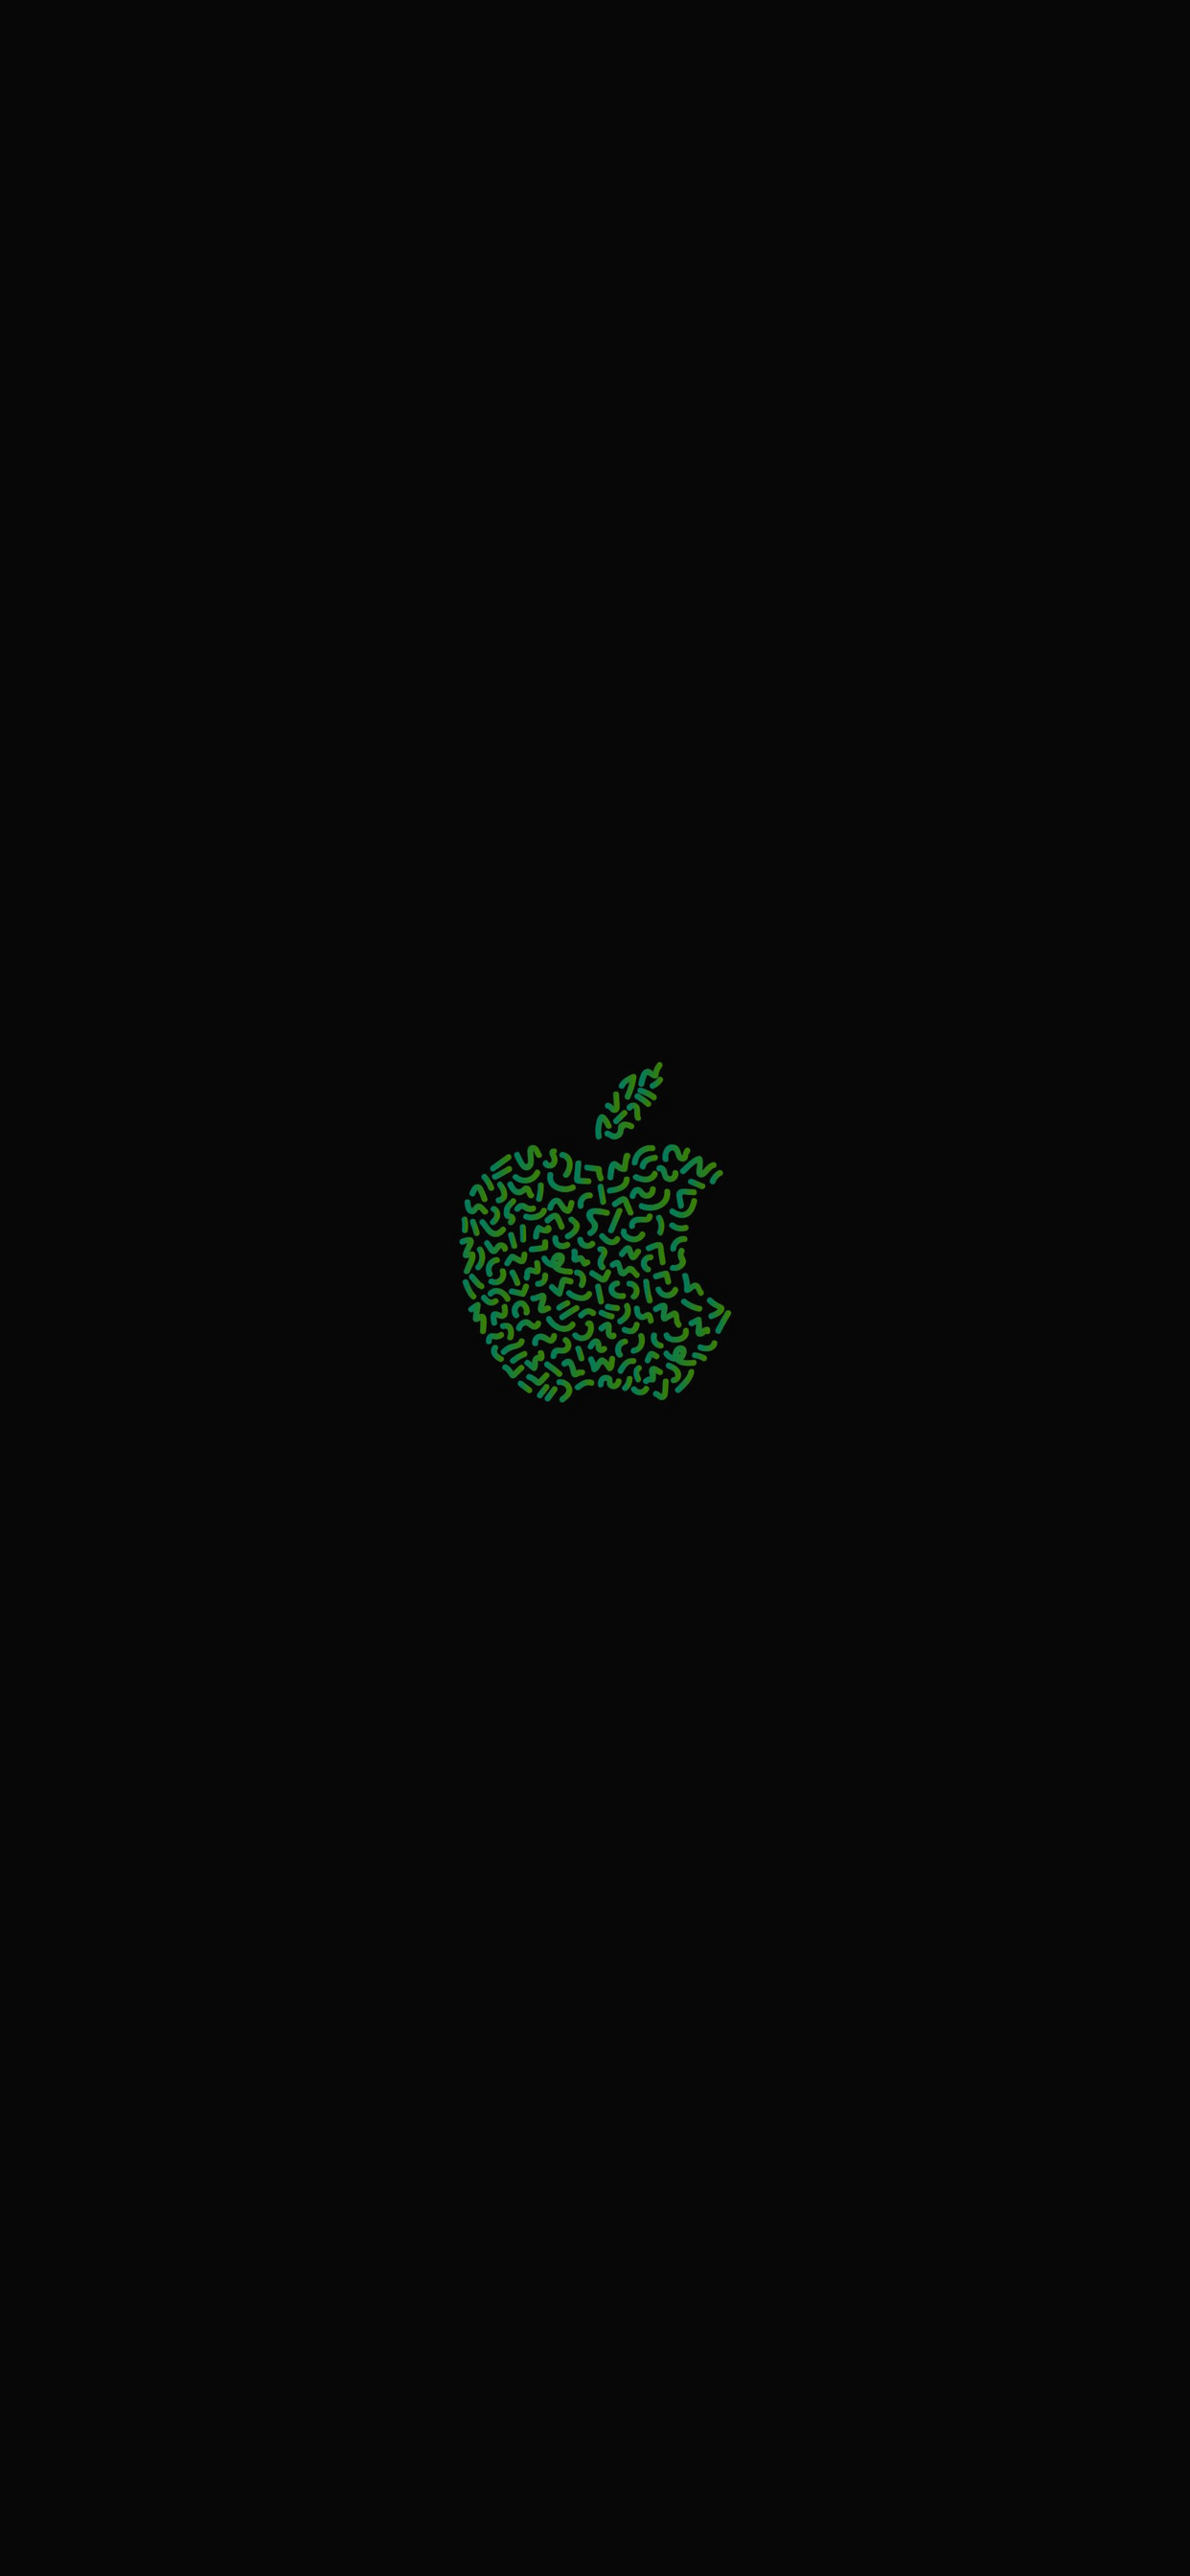 Abstract Green Apple Logo wallpaper